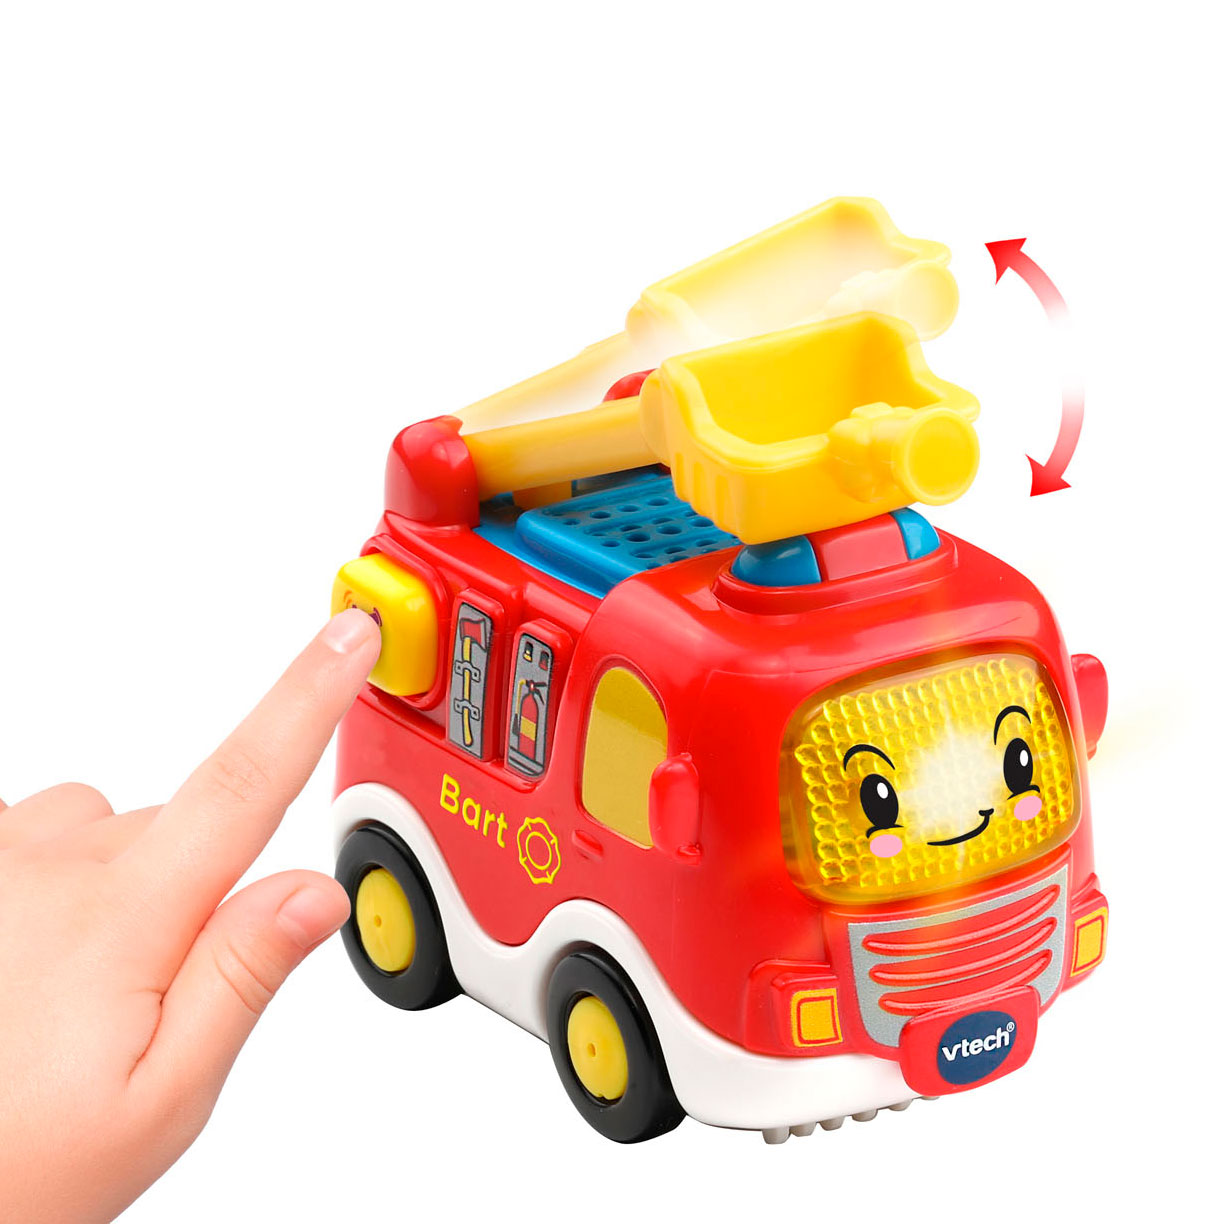 Geestig Hallo benzine VTech Toet Toet Cars - Bart Brandweer | Thimble Toys